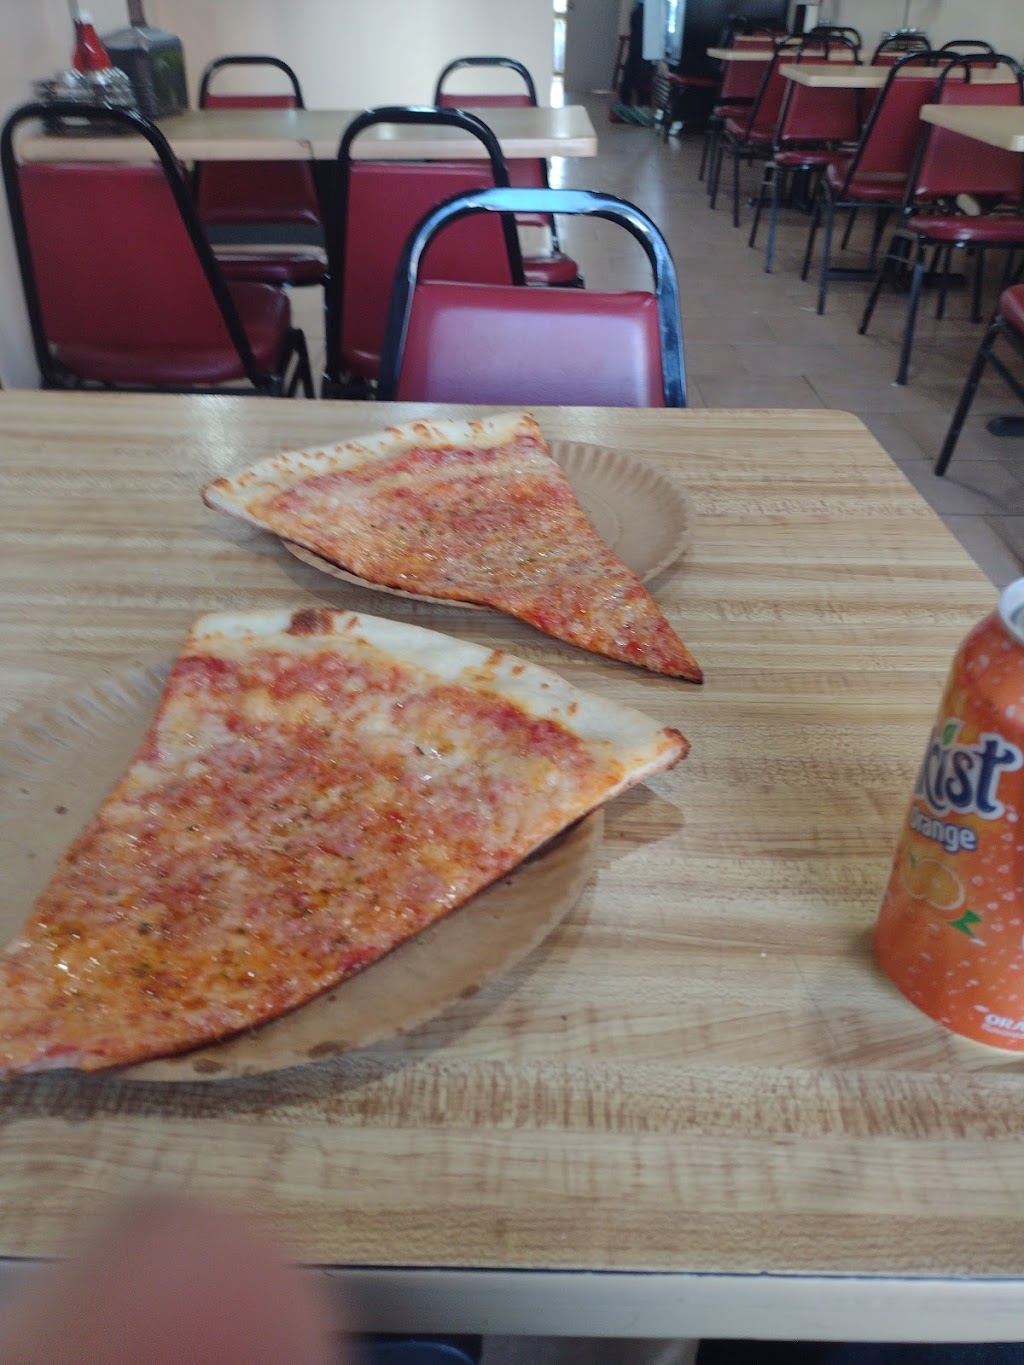 Bruno’s Pizza | 721 Avenue A, Bayonne, NJ 07002 | Phone: (201) 520-9042